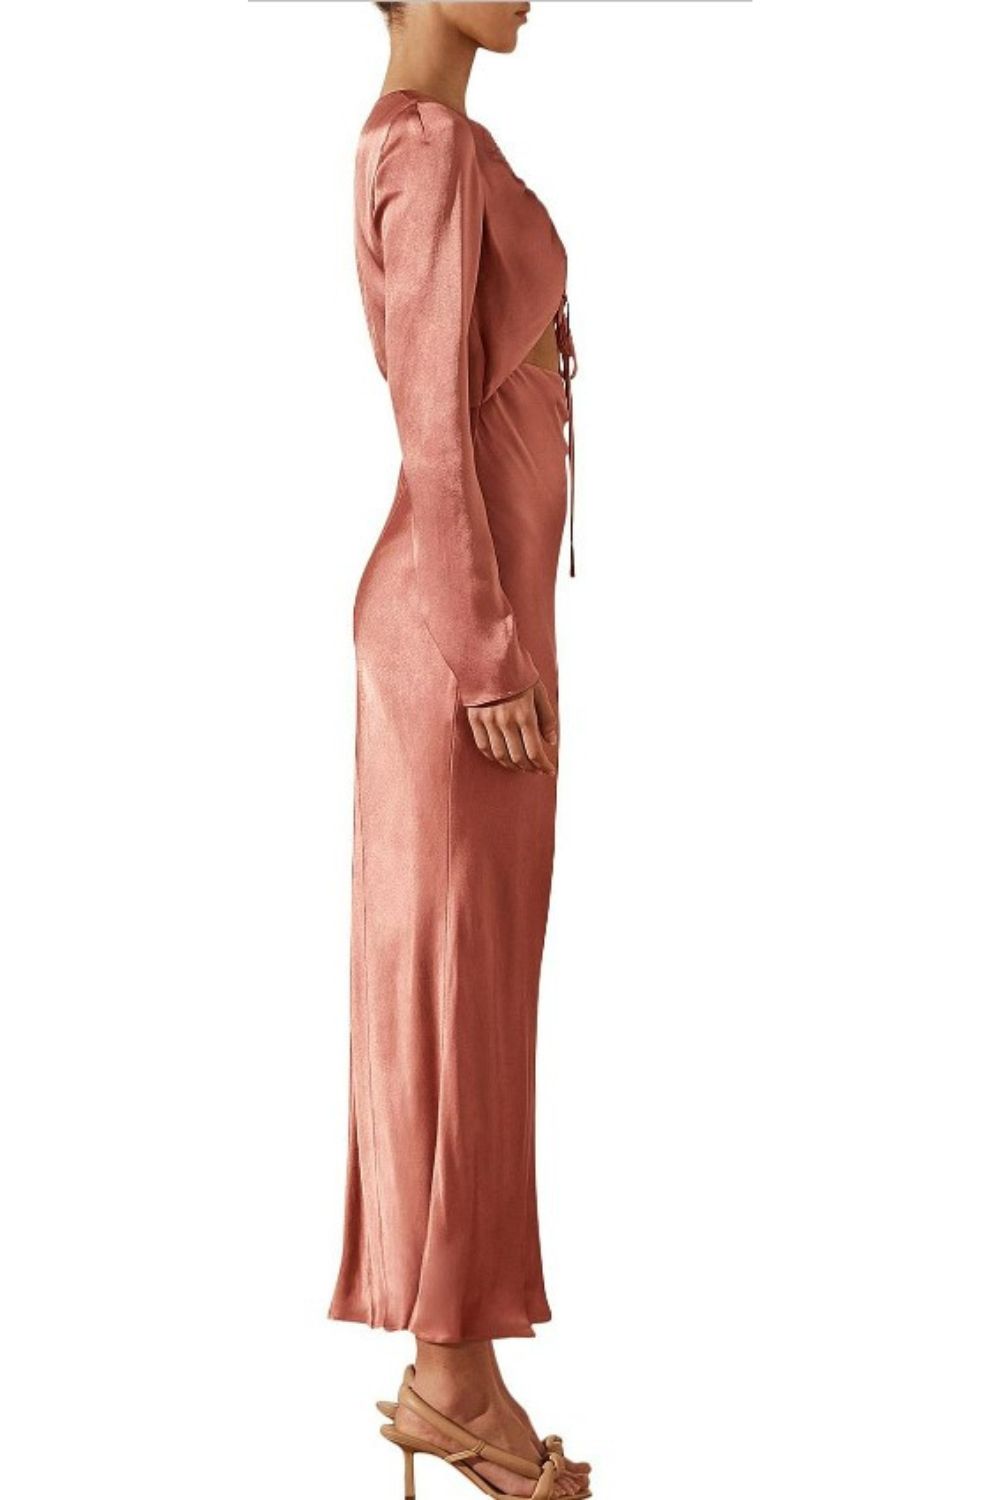 Shona Joy | Anjelica Long Sleeve Cut Out Midi Dress | Rouge - NWT